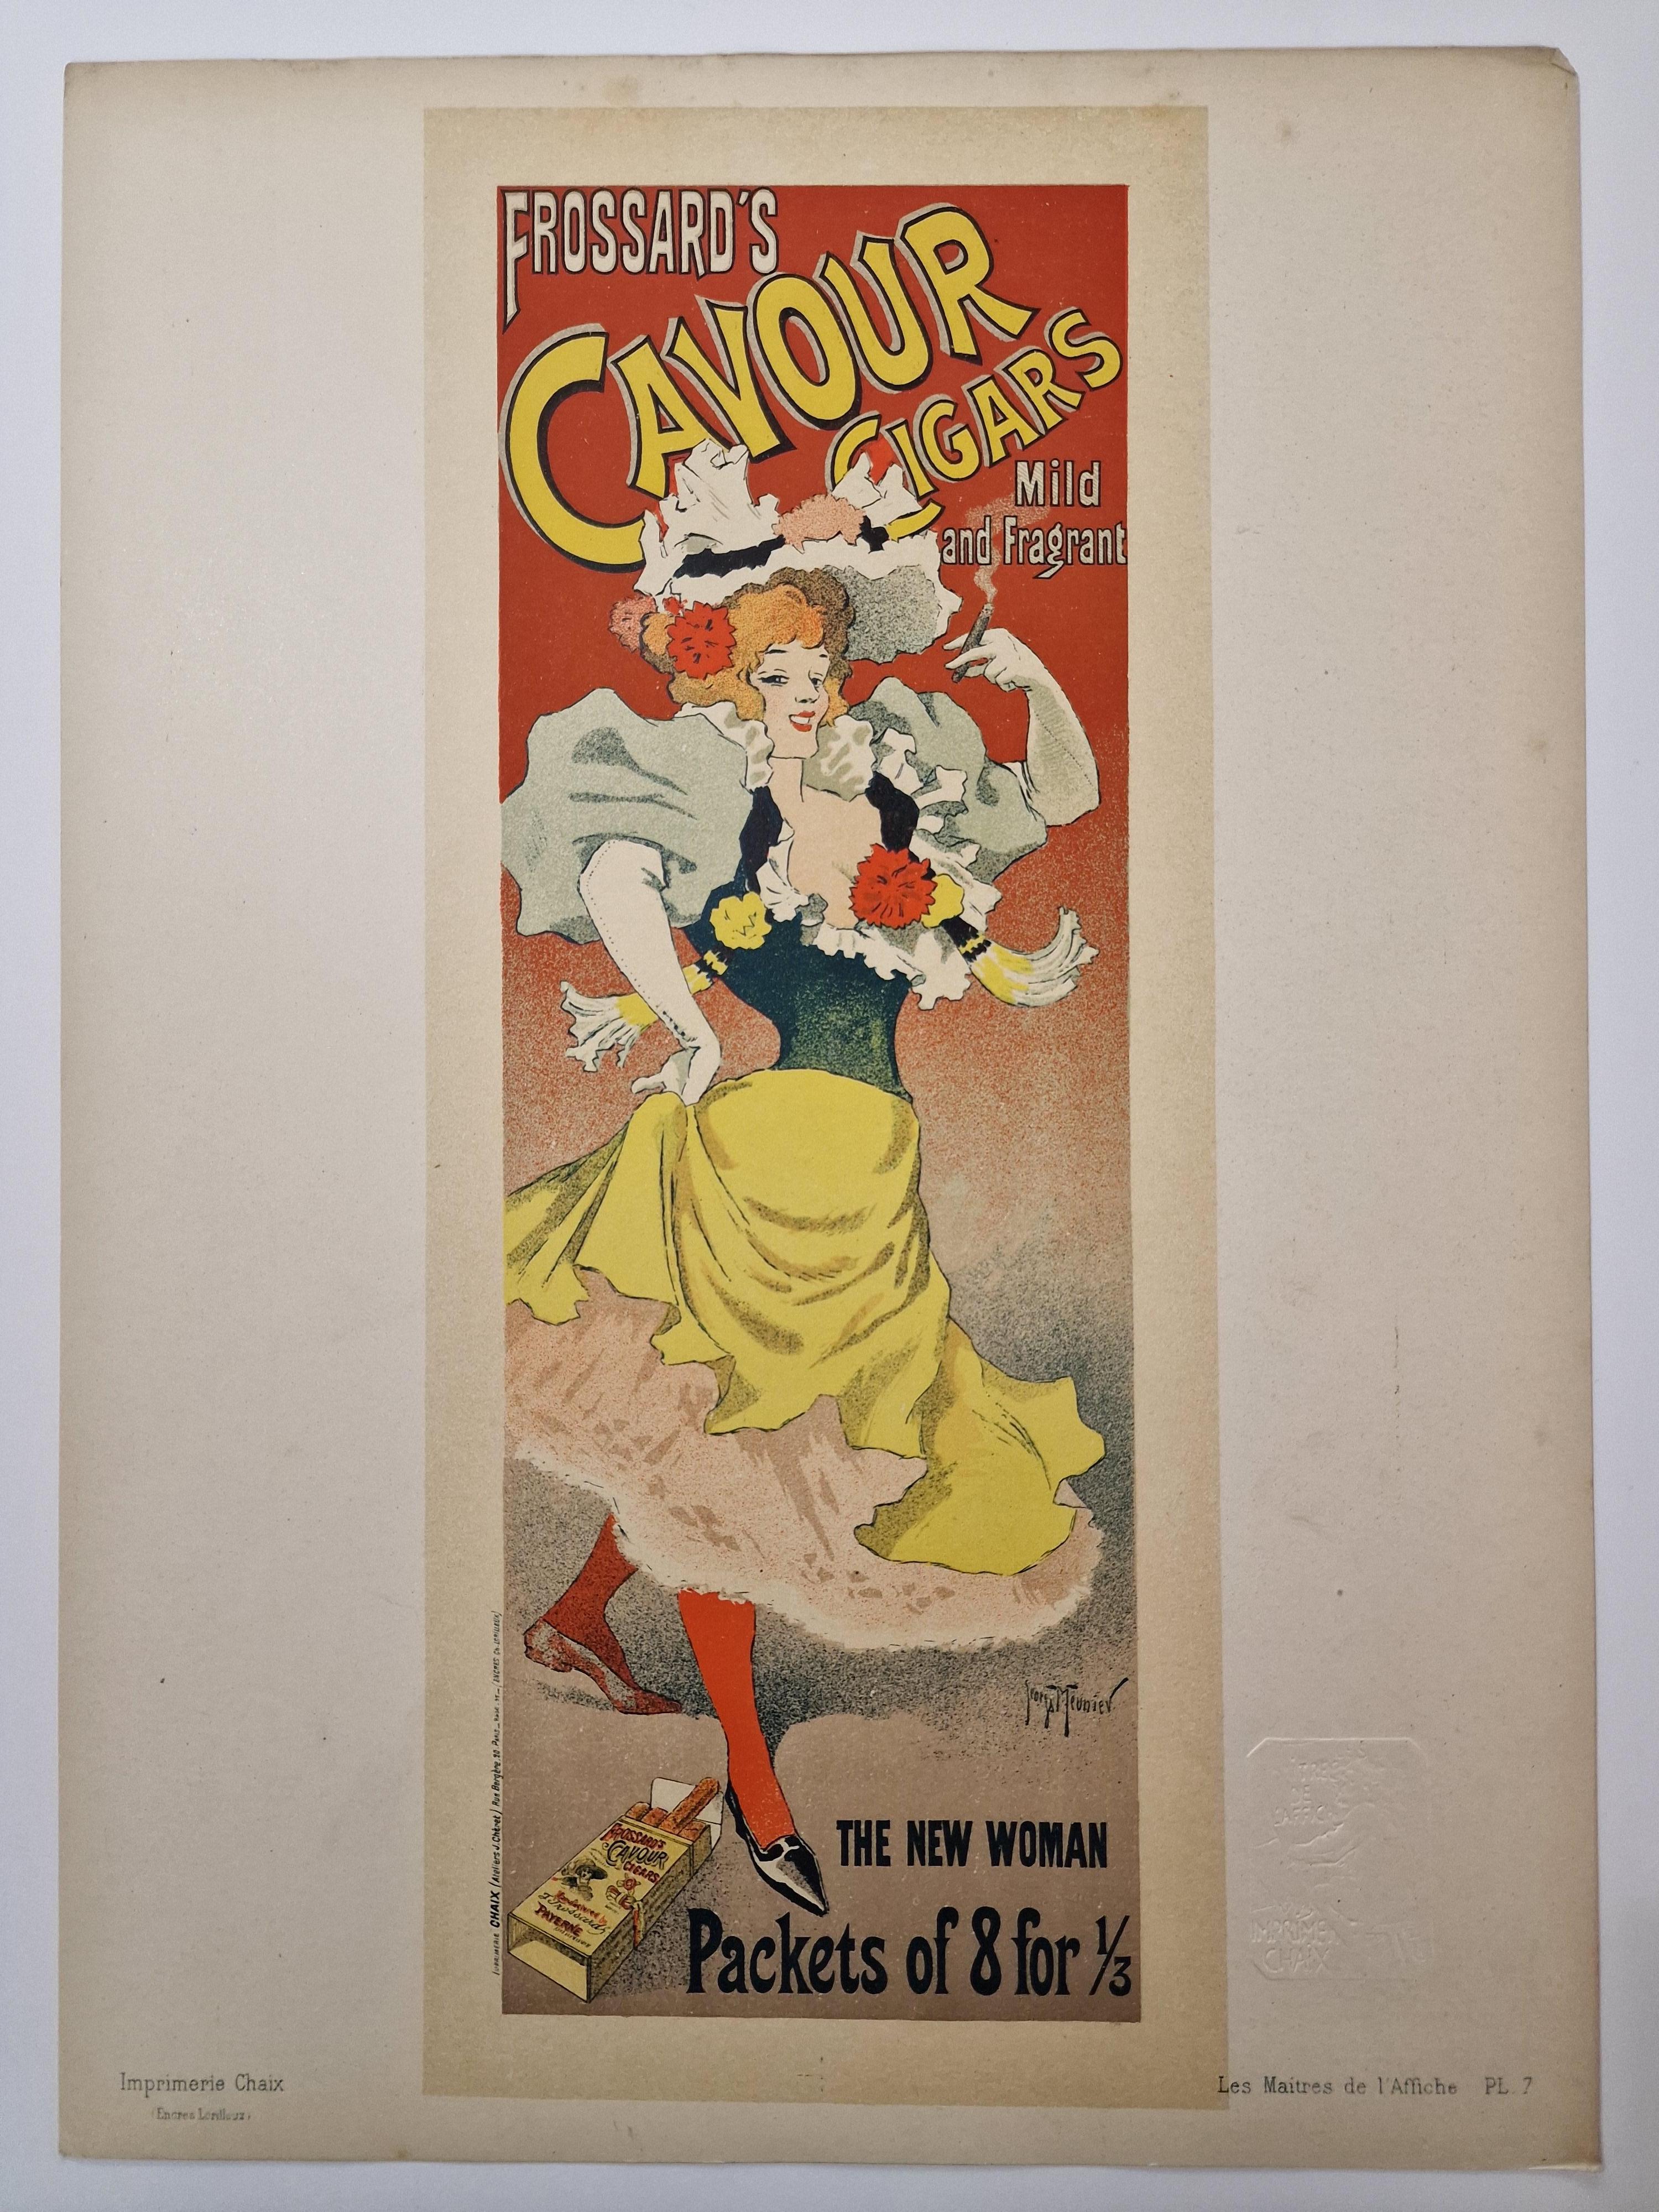 Georges Meunier Print - Frossard's Cavour cigars.